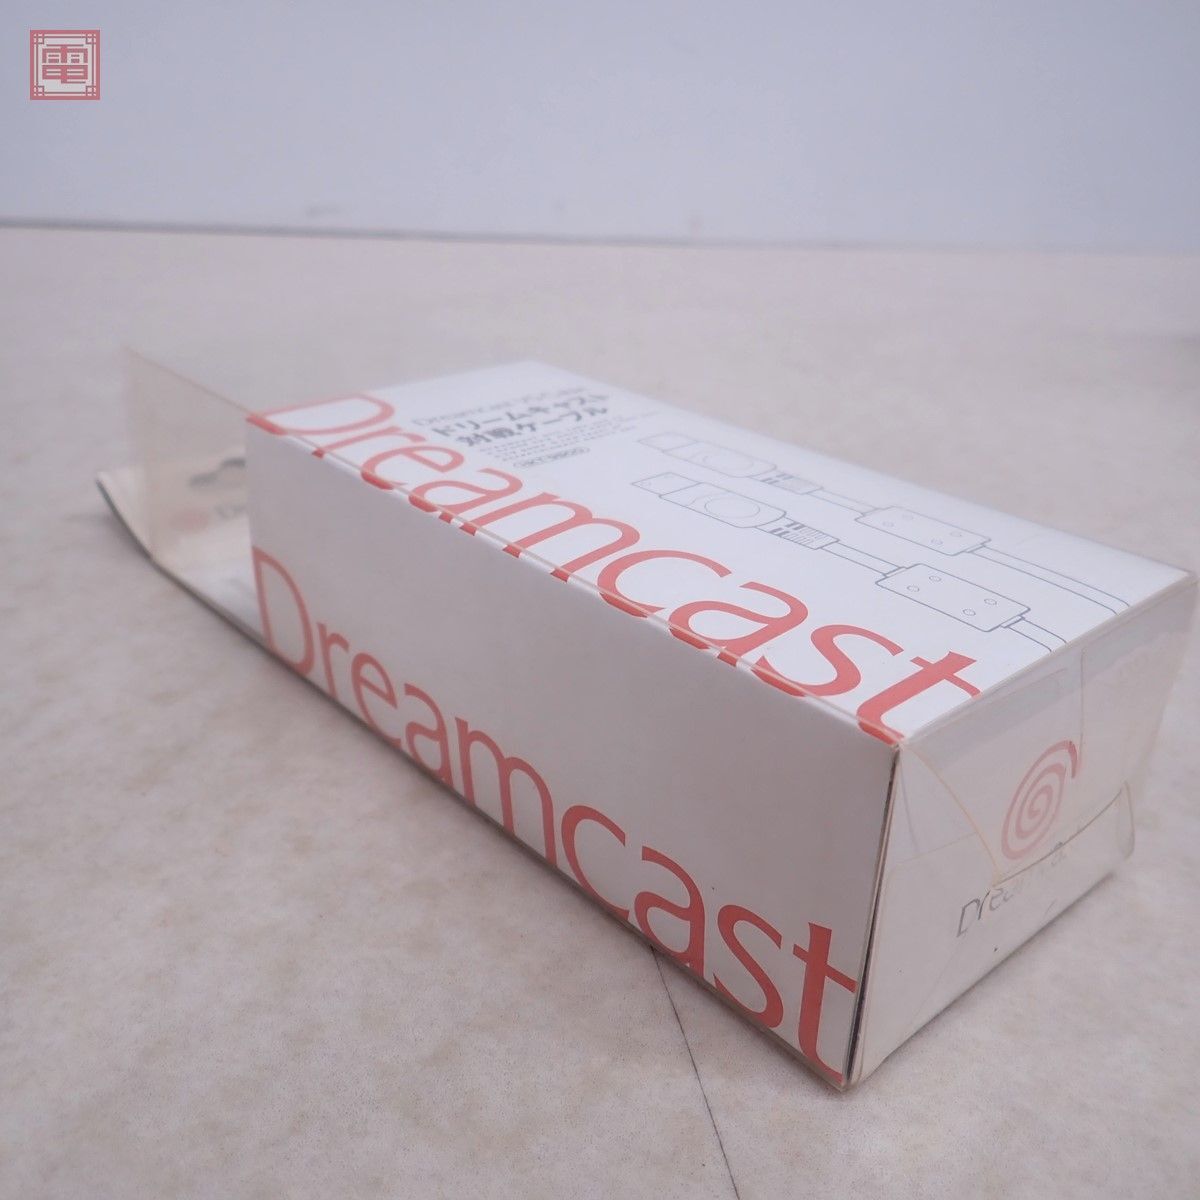 DCdoli Cath Dreamcast на битва кабель HKT-9500 Sega SEGA с ящиком [10